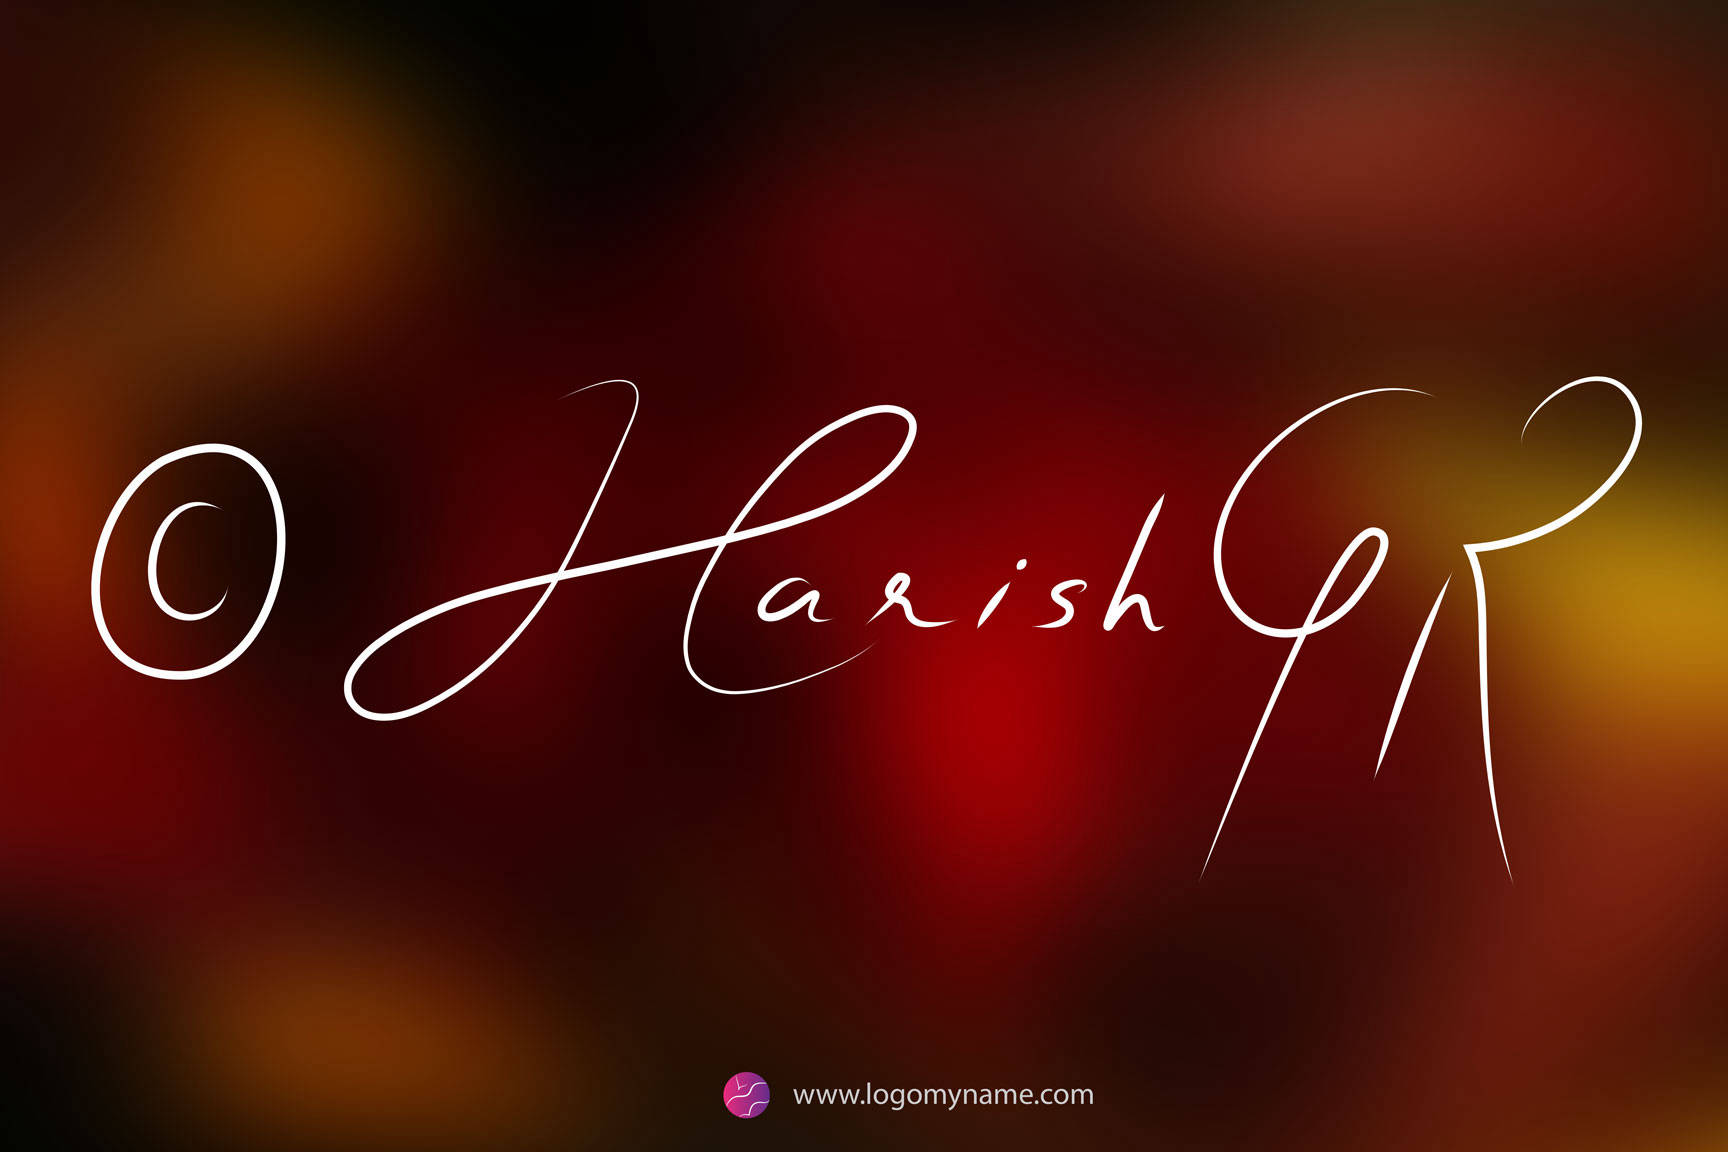 Haris logo, Vector Logo of Haris brand free download (eps, ai, png, cdr)  formats